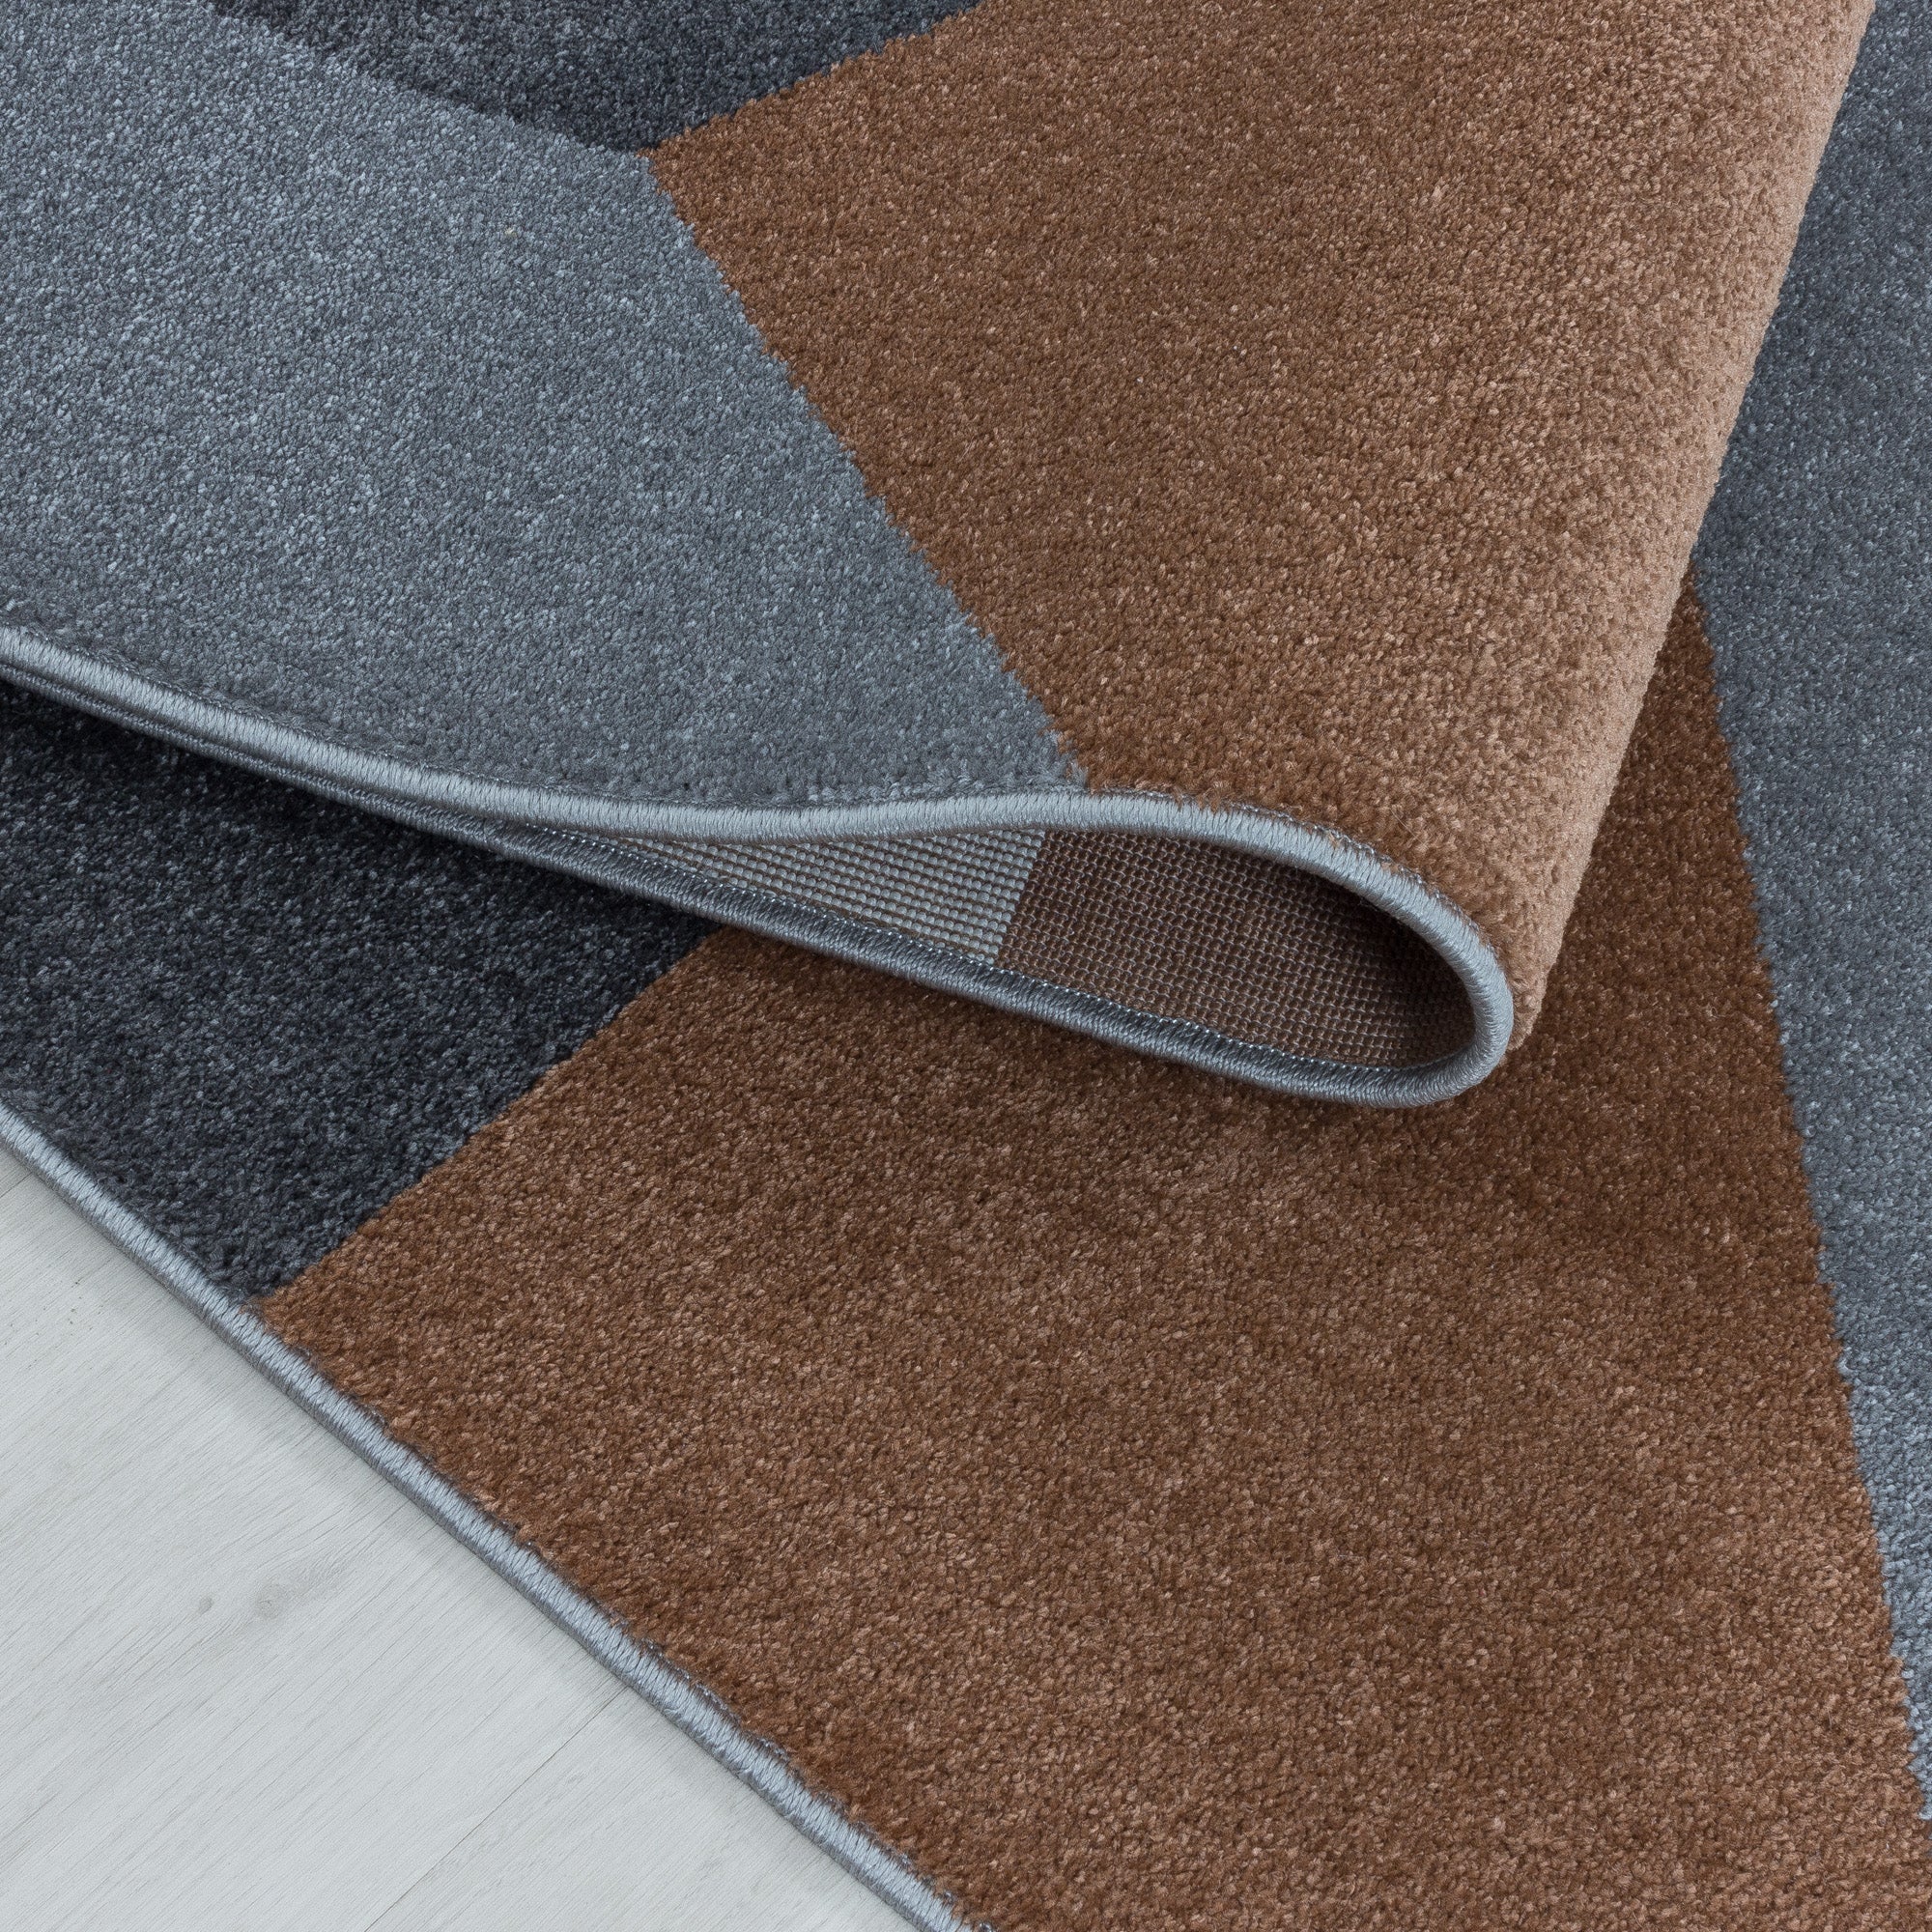 Kurzflor Teppich Bettset Terra Muster Geometrisch Modern Läuferset 3 Teile Weich